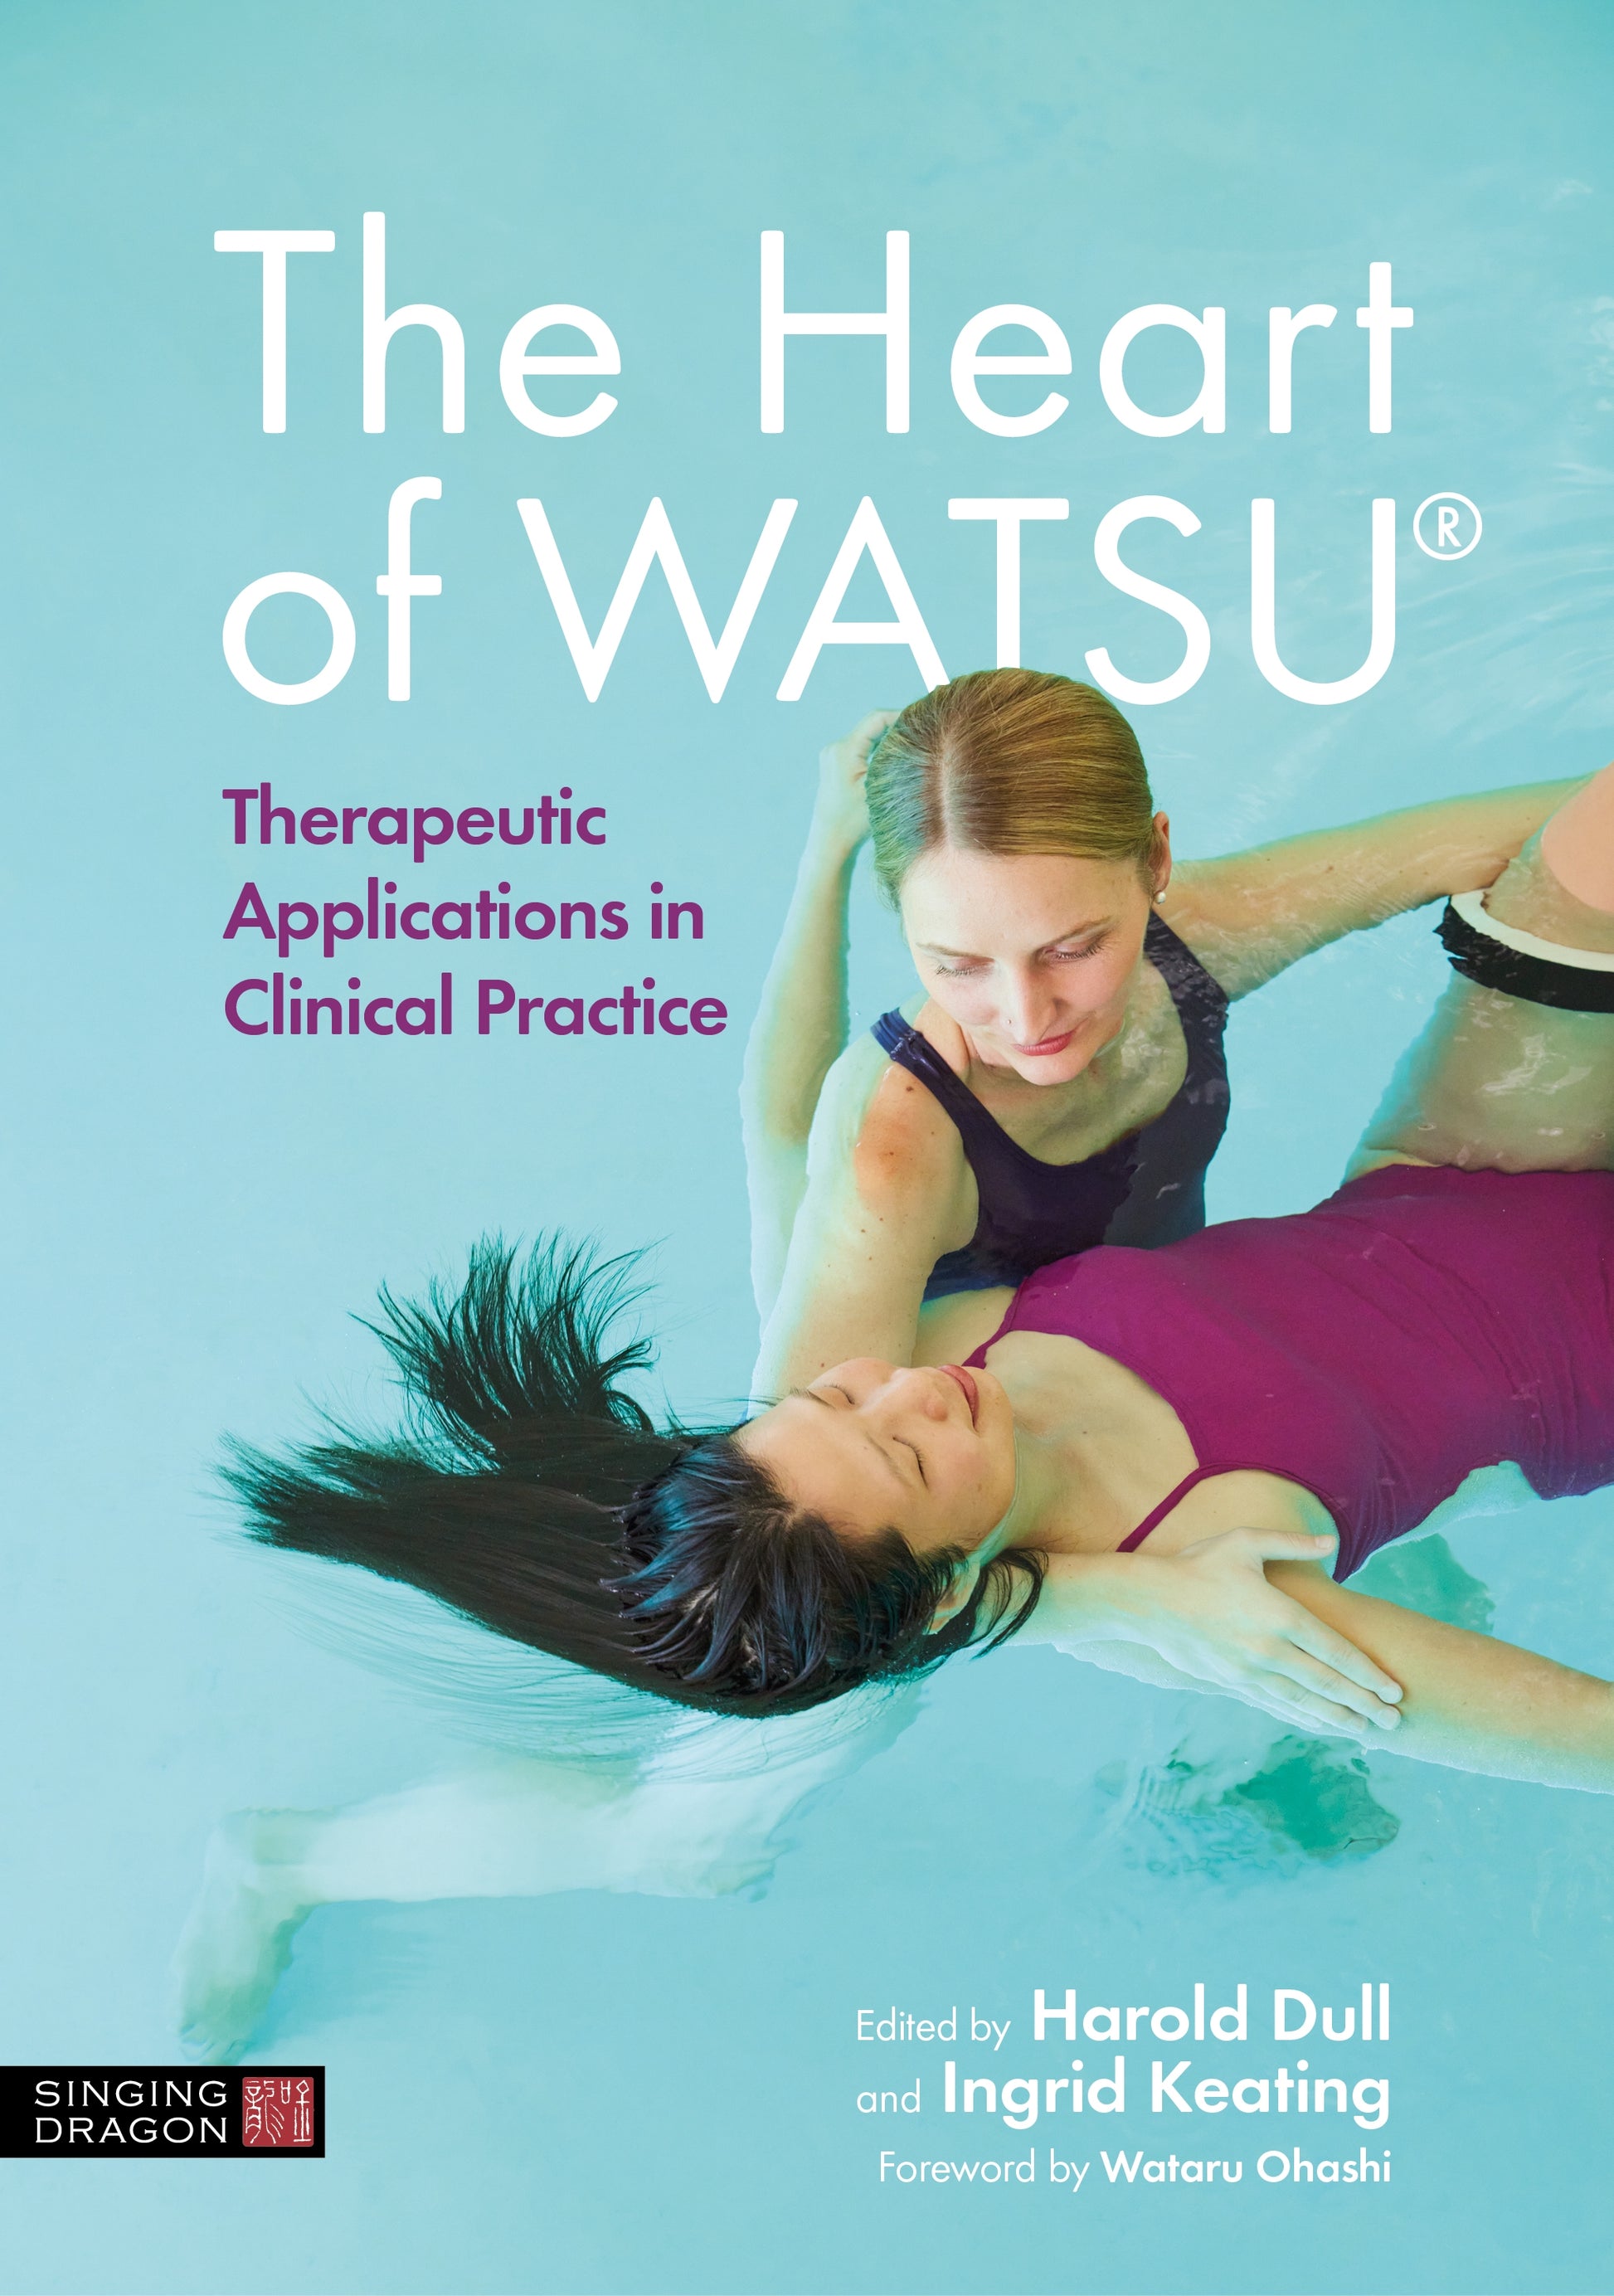 The Heart of WATSU® by Harold Dull, Ingrid Keating, Wataru Ohashi, No Author Listed